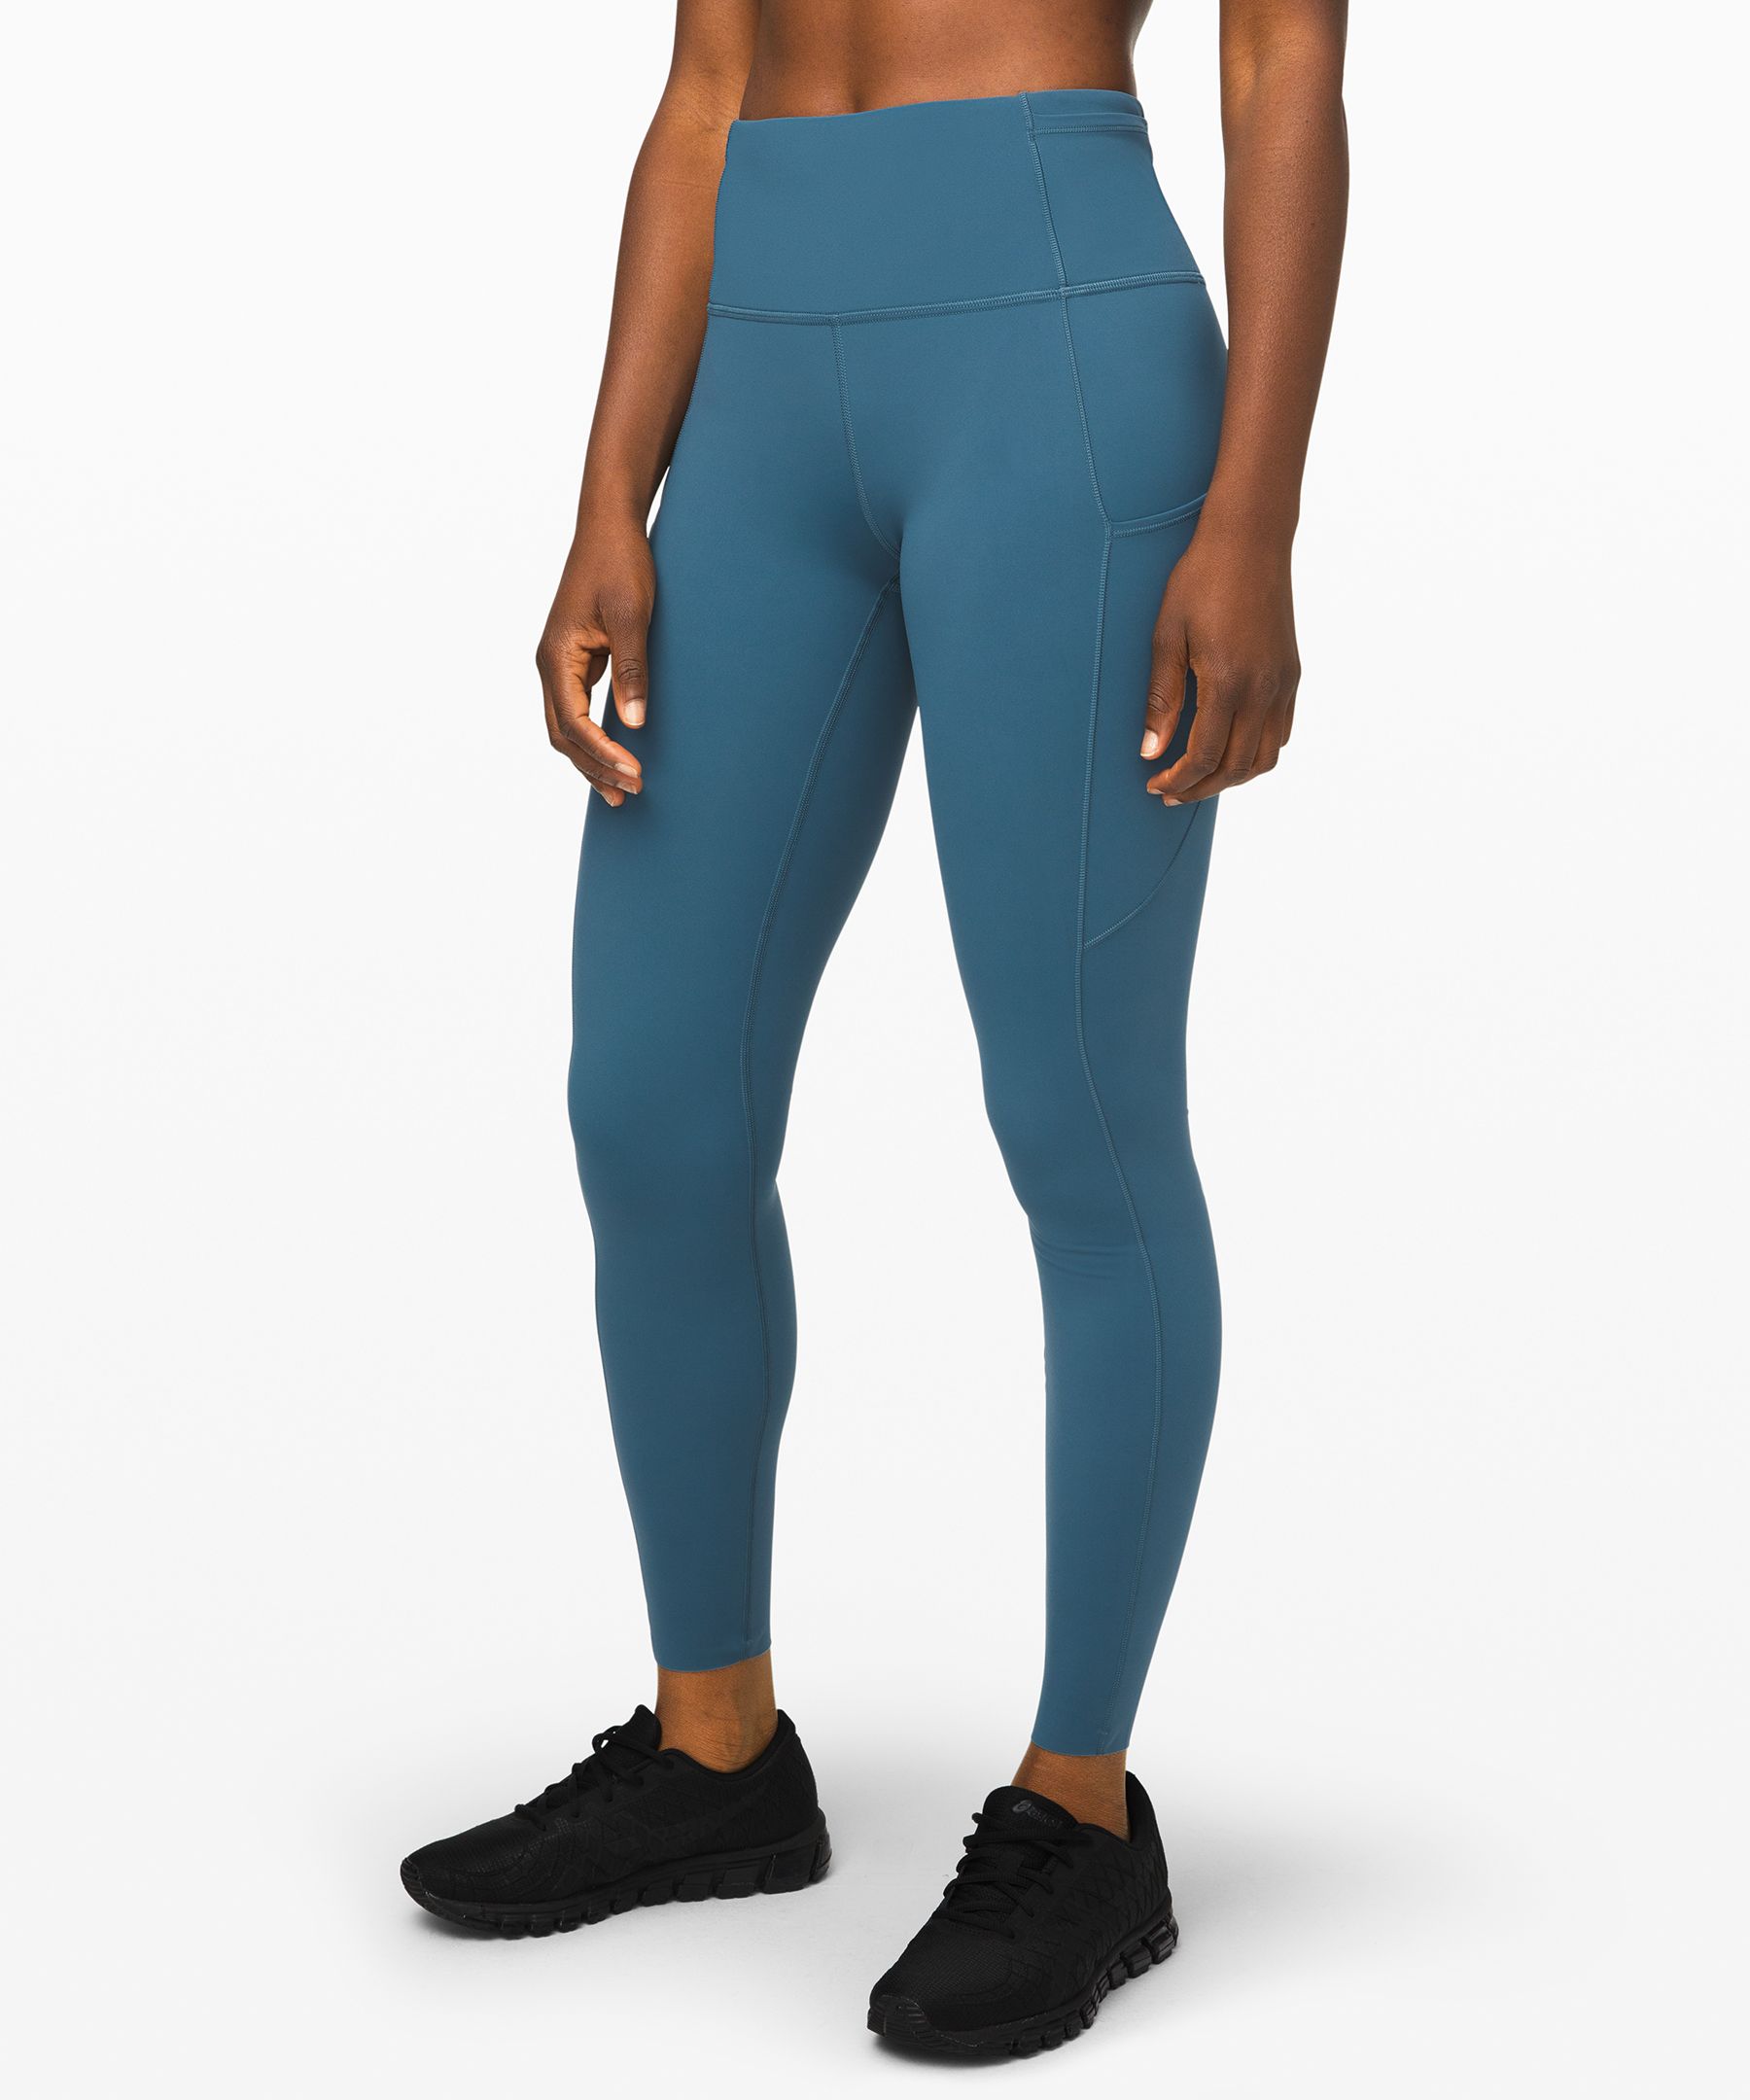 petrol blue lululemon leggings review